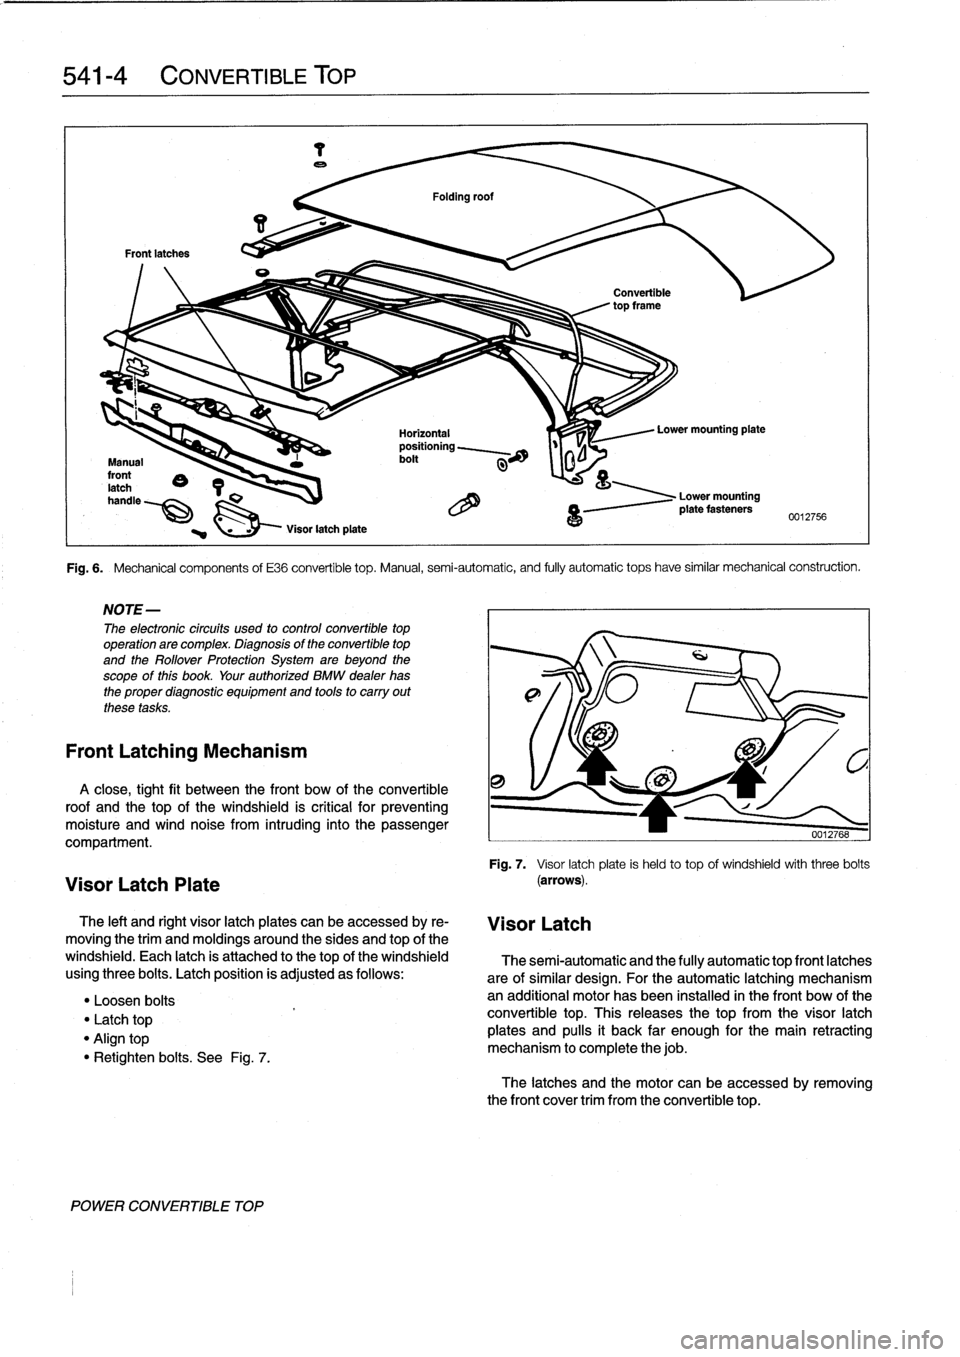 BMW 325i 1992 E36 Workshop Manual 
541-
4

	

CONVERTIBLE
TOP

Folding
roof

Frontlatches

Convertible
topframe

i

Lower
mounting
pata
Horizontal
positioning
~~-
bolt
Manual
front
8
e
latch

	

1
handle

~

	

O

Visor
latchplata

Fi